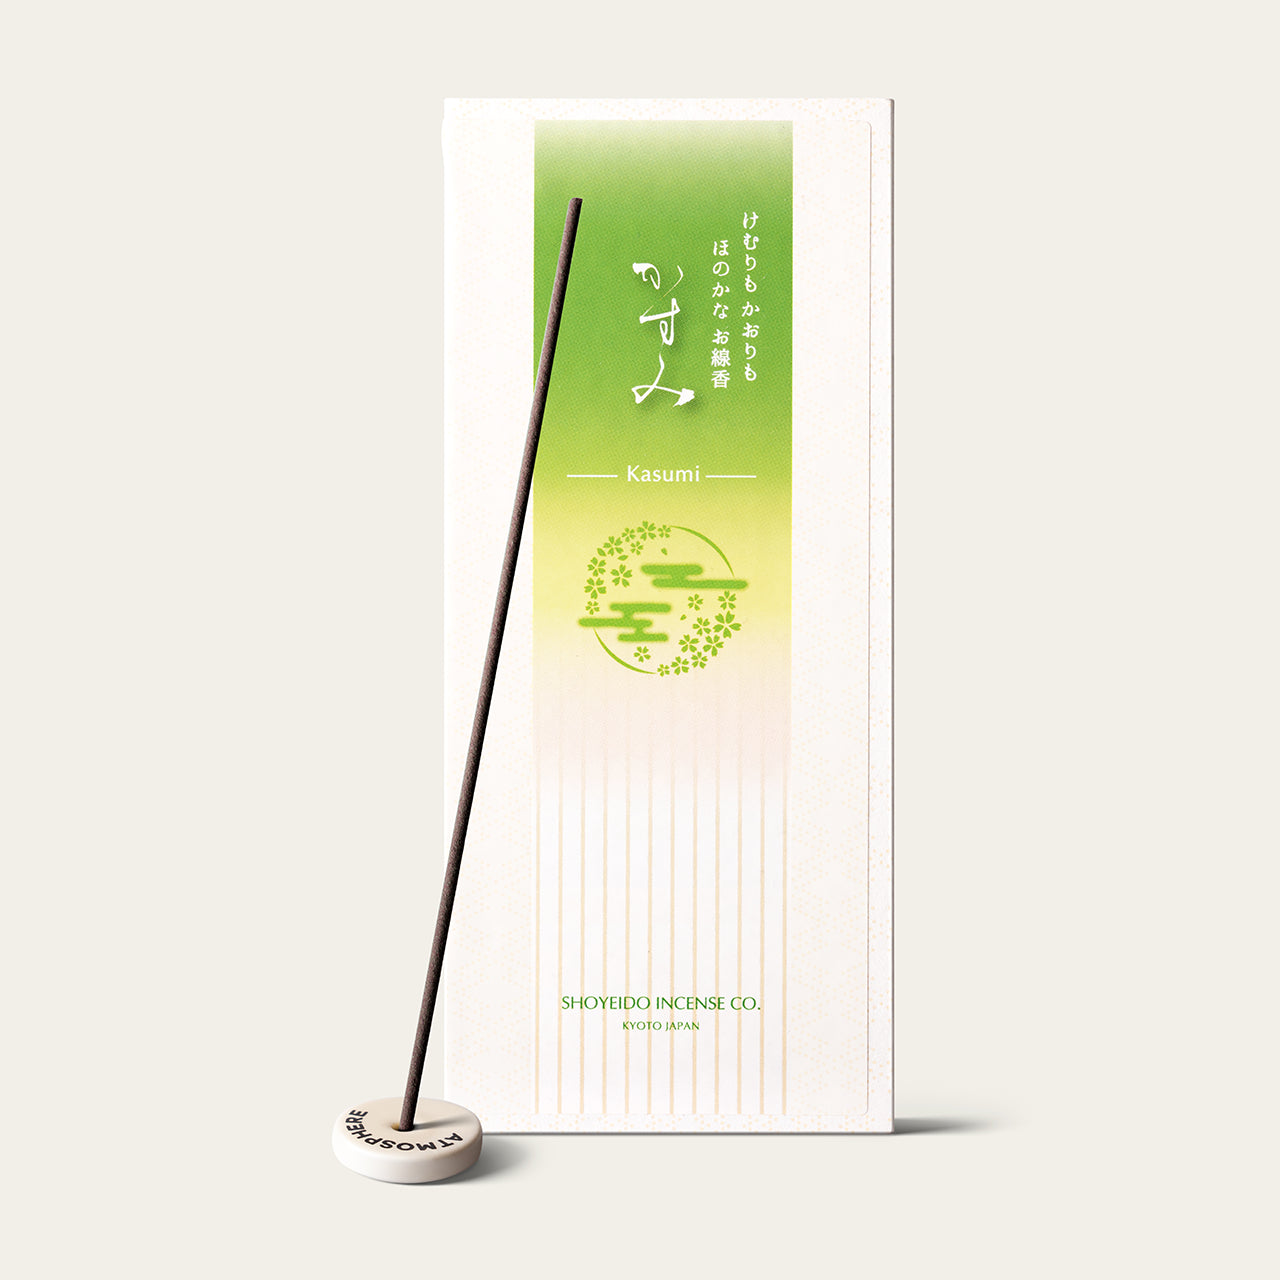 Shoyeido Low Smoke Gossamer Kasumi Japanese incense sticks (165 sticks) with Atmosphere ceramic incense holder